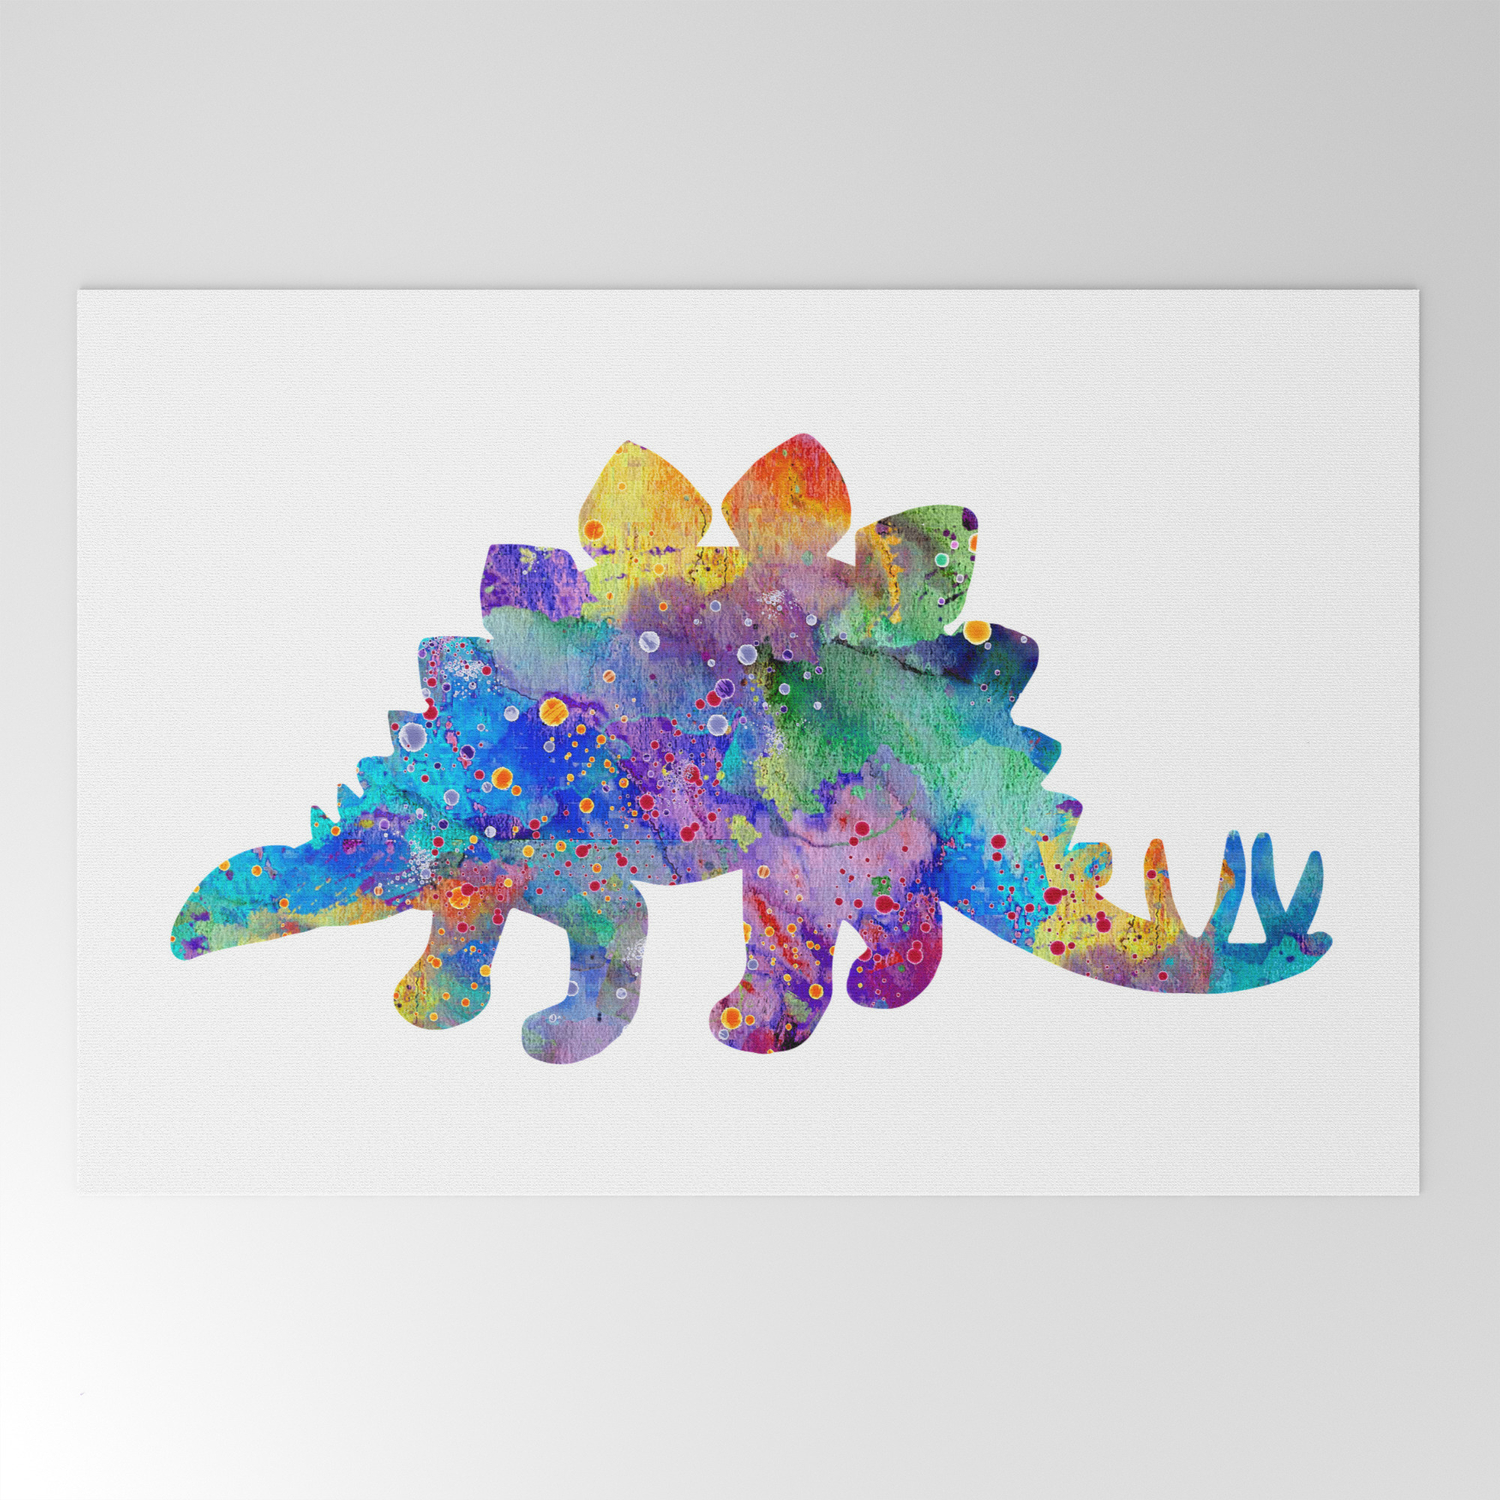 Stegosaurus Dinosaur For Kids Room SINGLE CANVAS WALL ART Picture Print